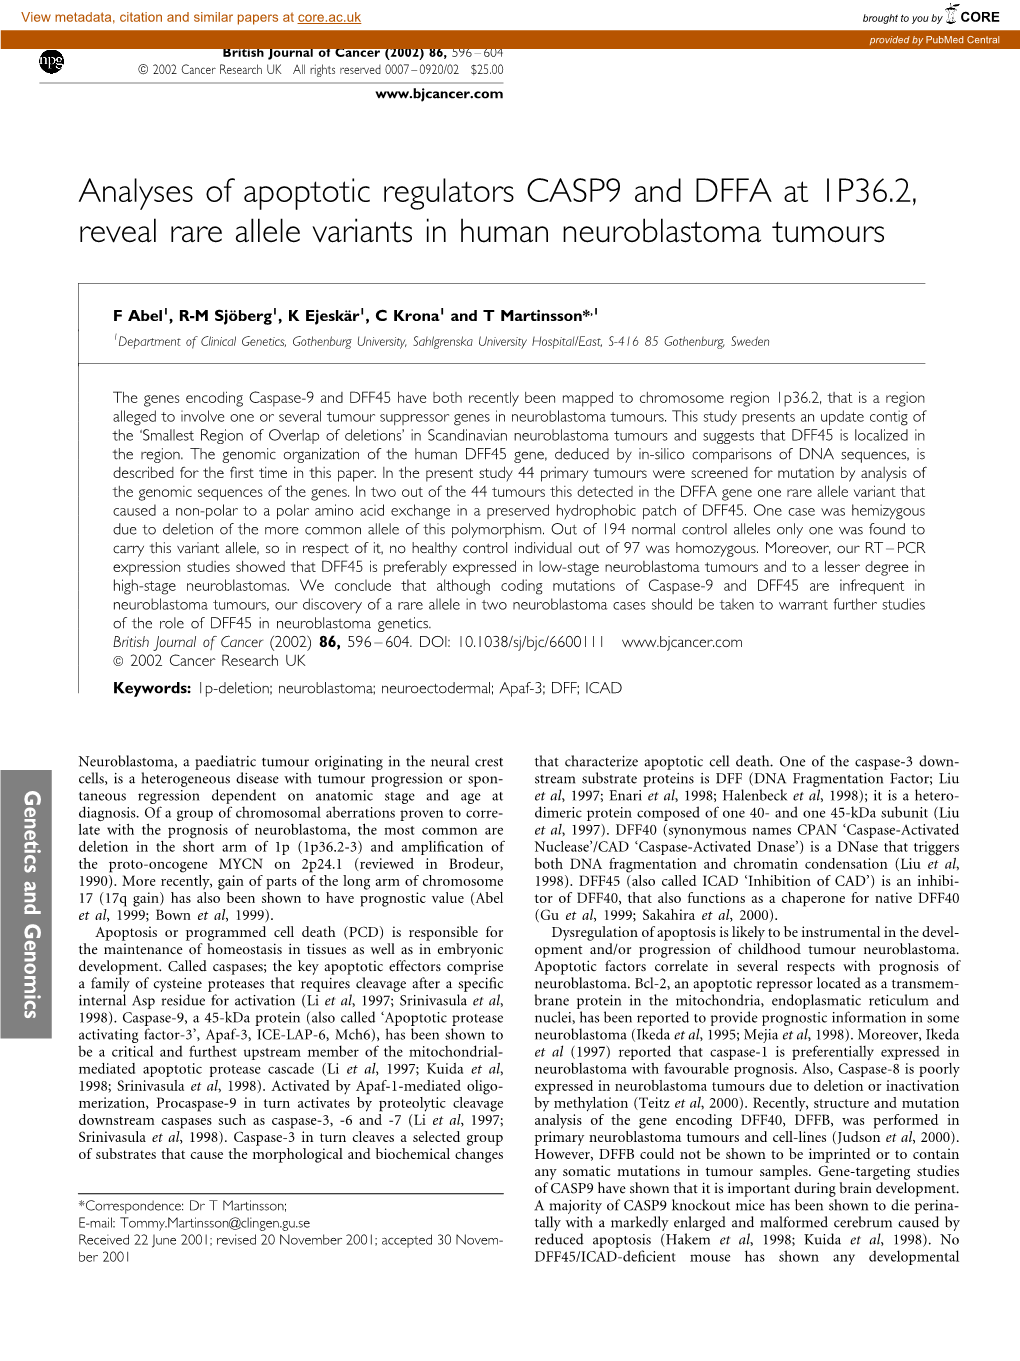 Analyses of Apoptotic Regulators CASP9 and DFFA at 1P36.2, Reveal Rare Allele Variants in Human Neuroblastoma Tumours